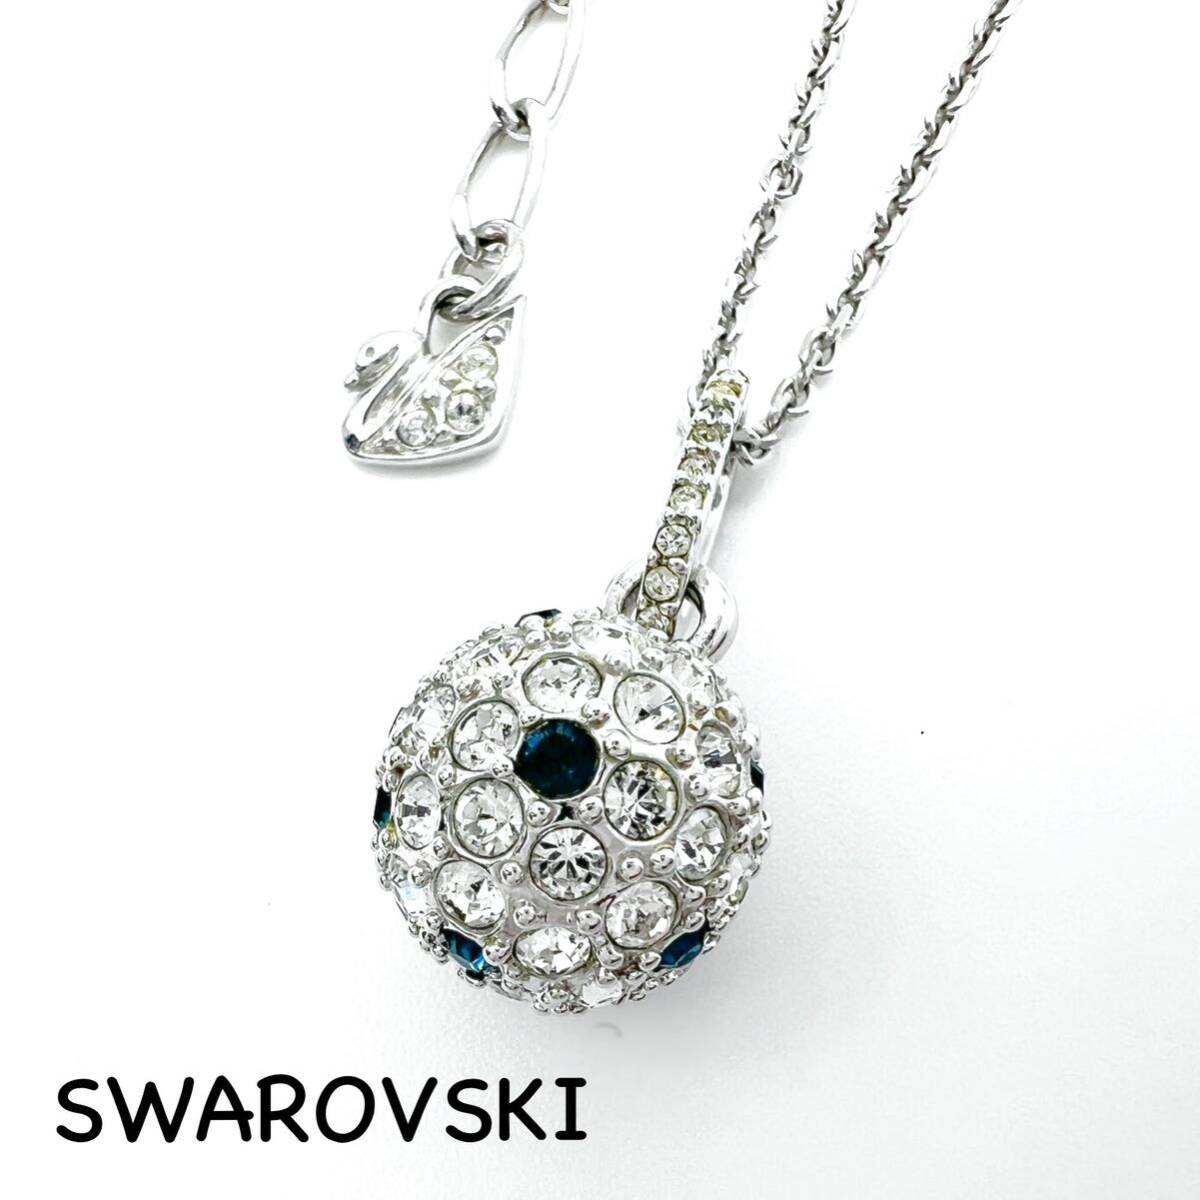 SWAROVSKIl Swarovski колье [ Acty ] мяч кольцо стразы pave серебряный цвет бренд a505et